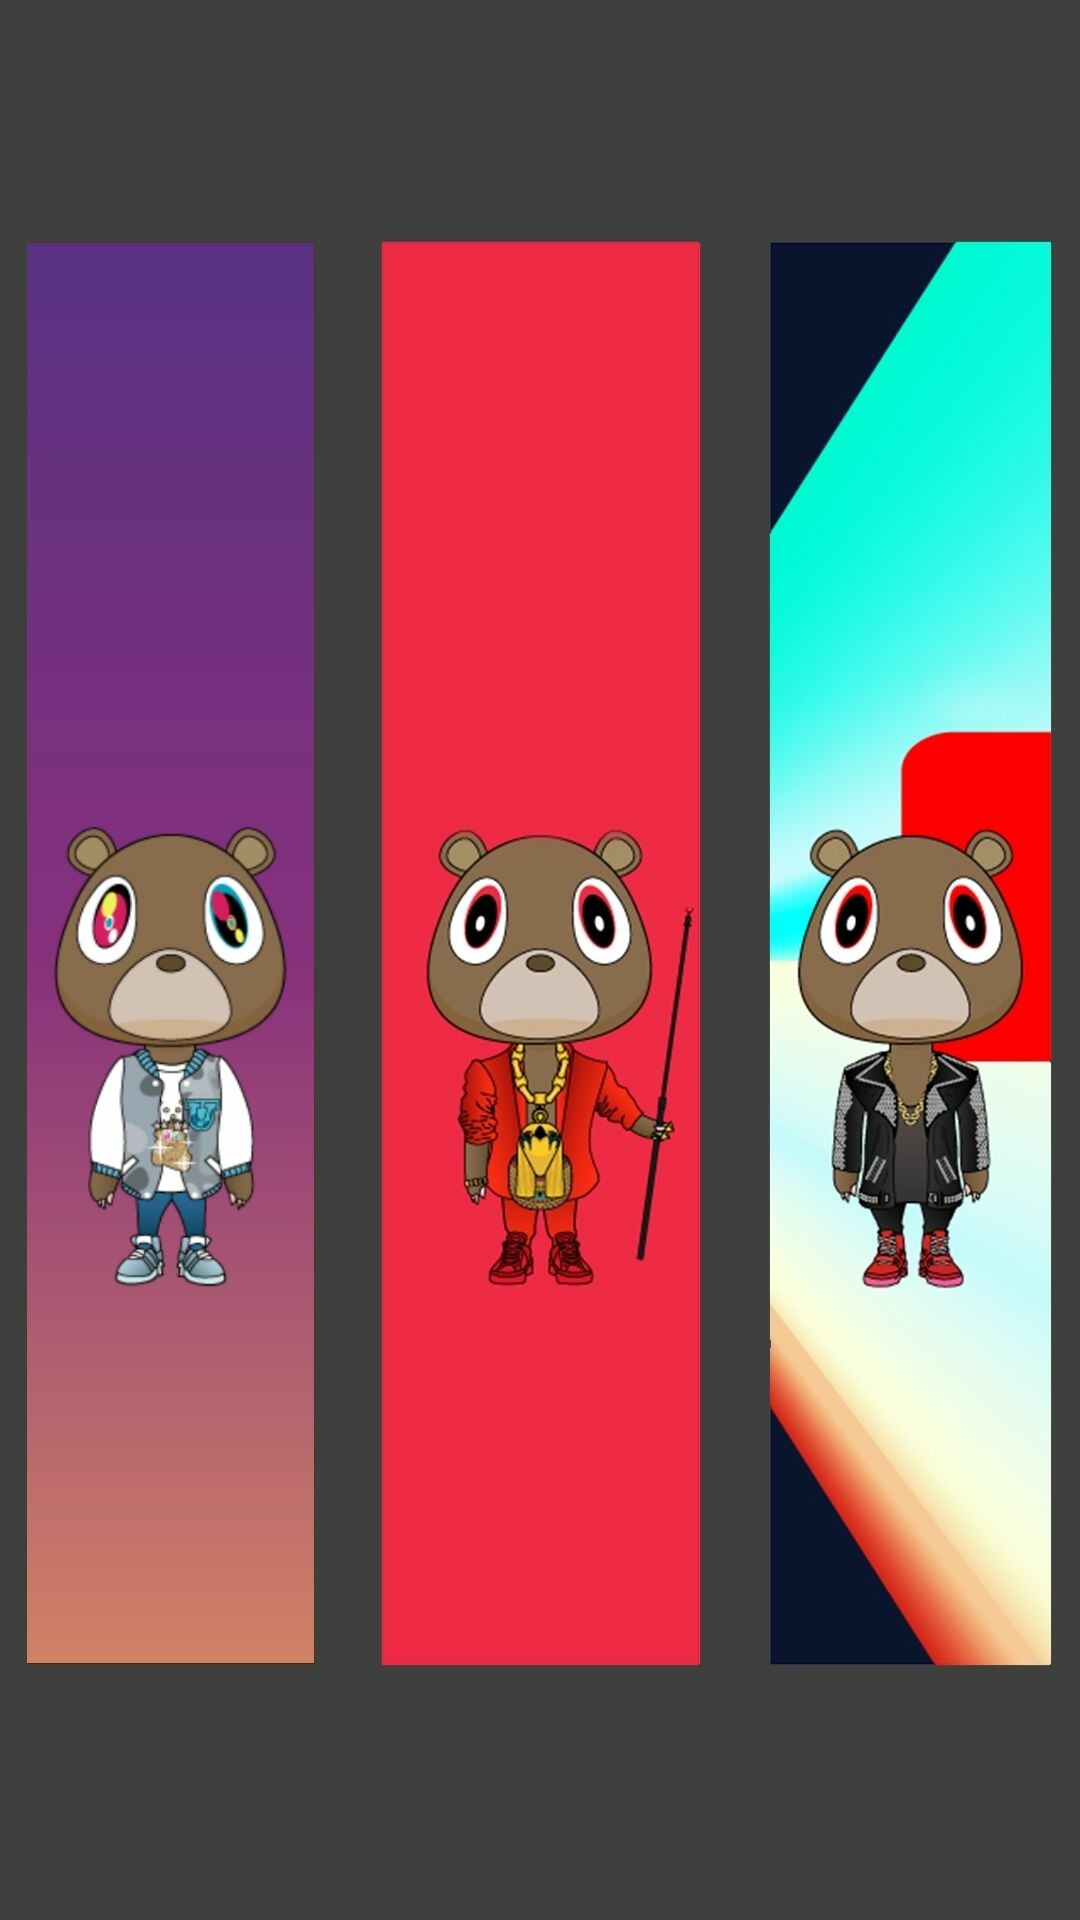 Kanye West: Yeezy bear, Music album, Def Jam Recordings, Roc-A-Fella Records. 1080x1920 Full HD Wallpaper.